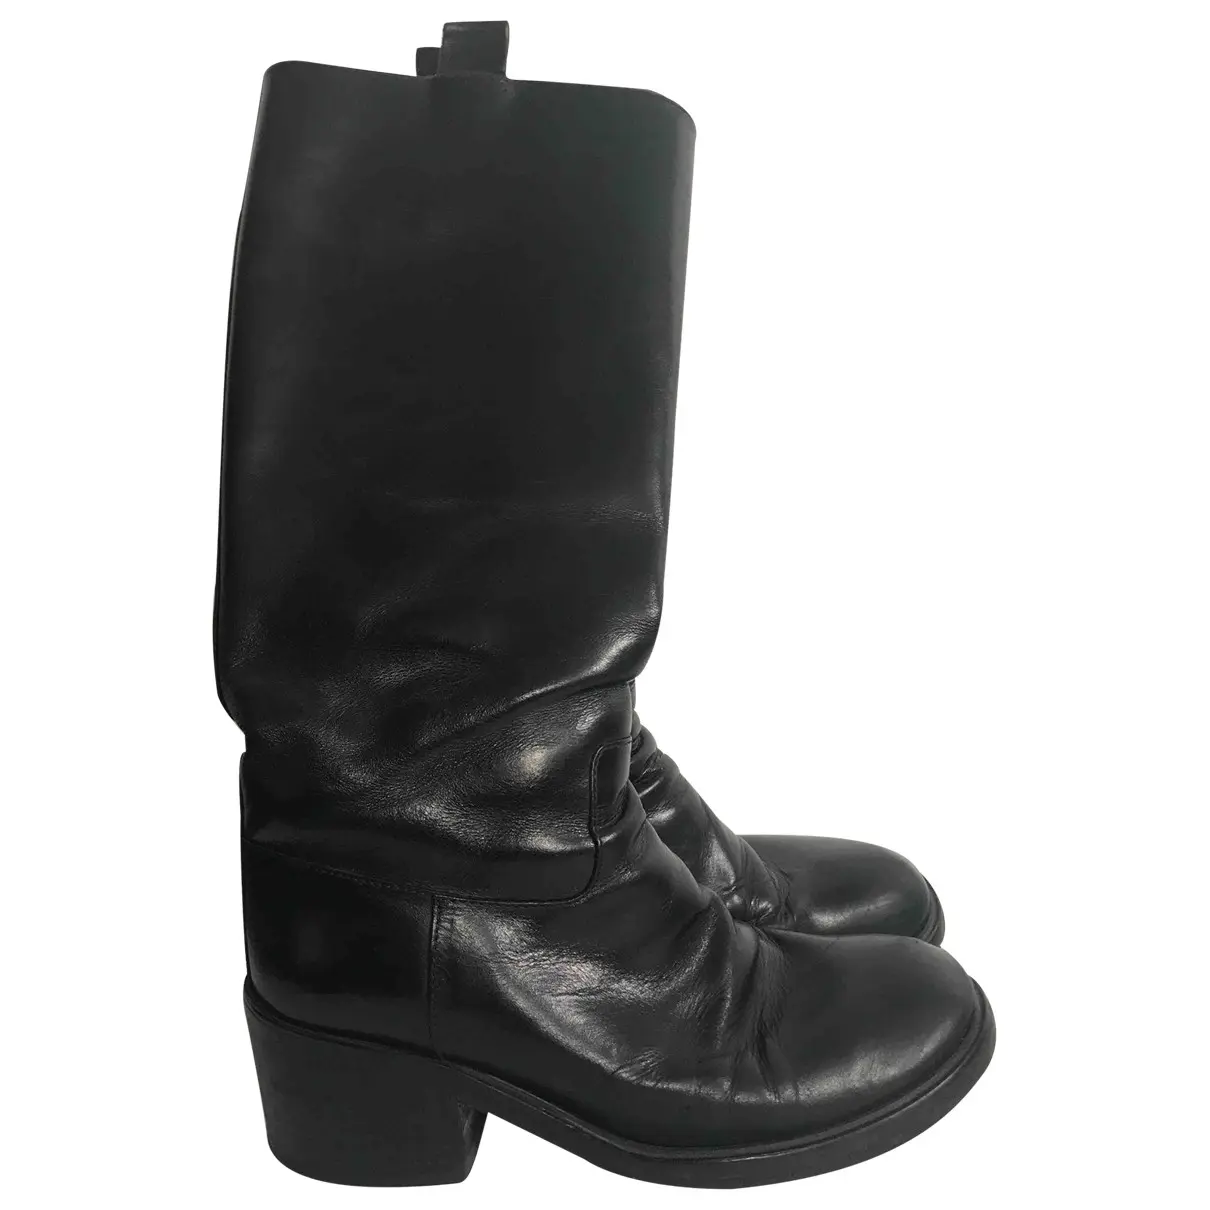 Leather boots A.F.Vandevorst